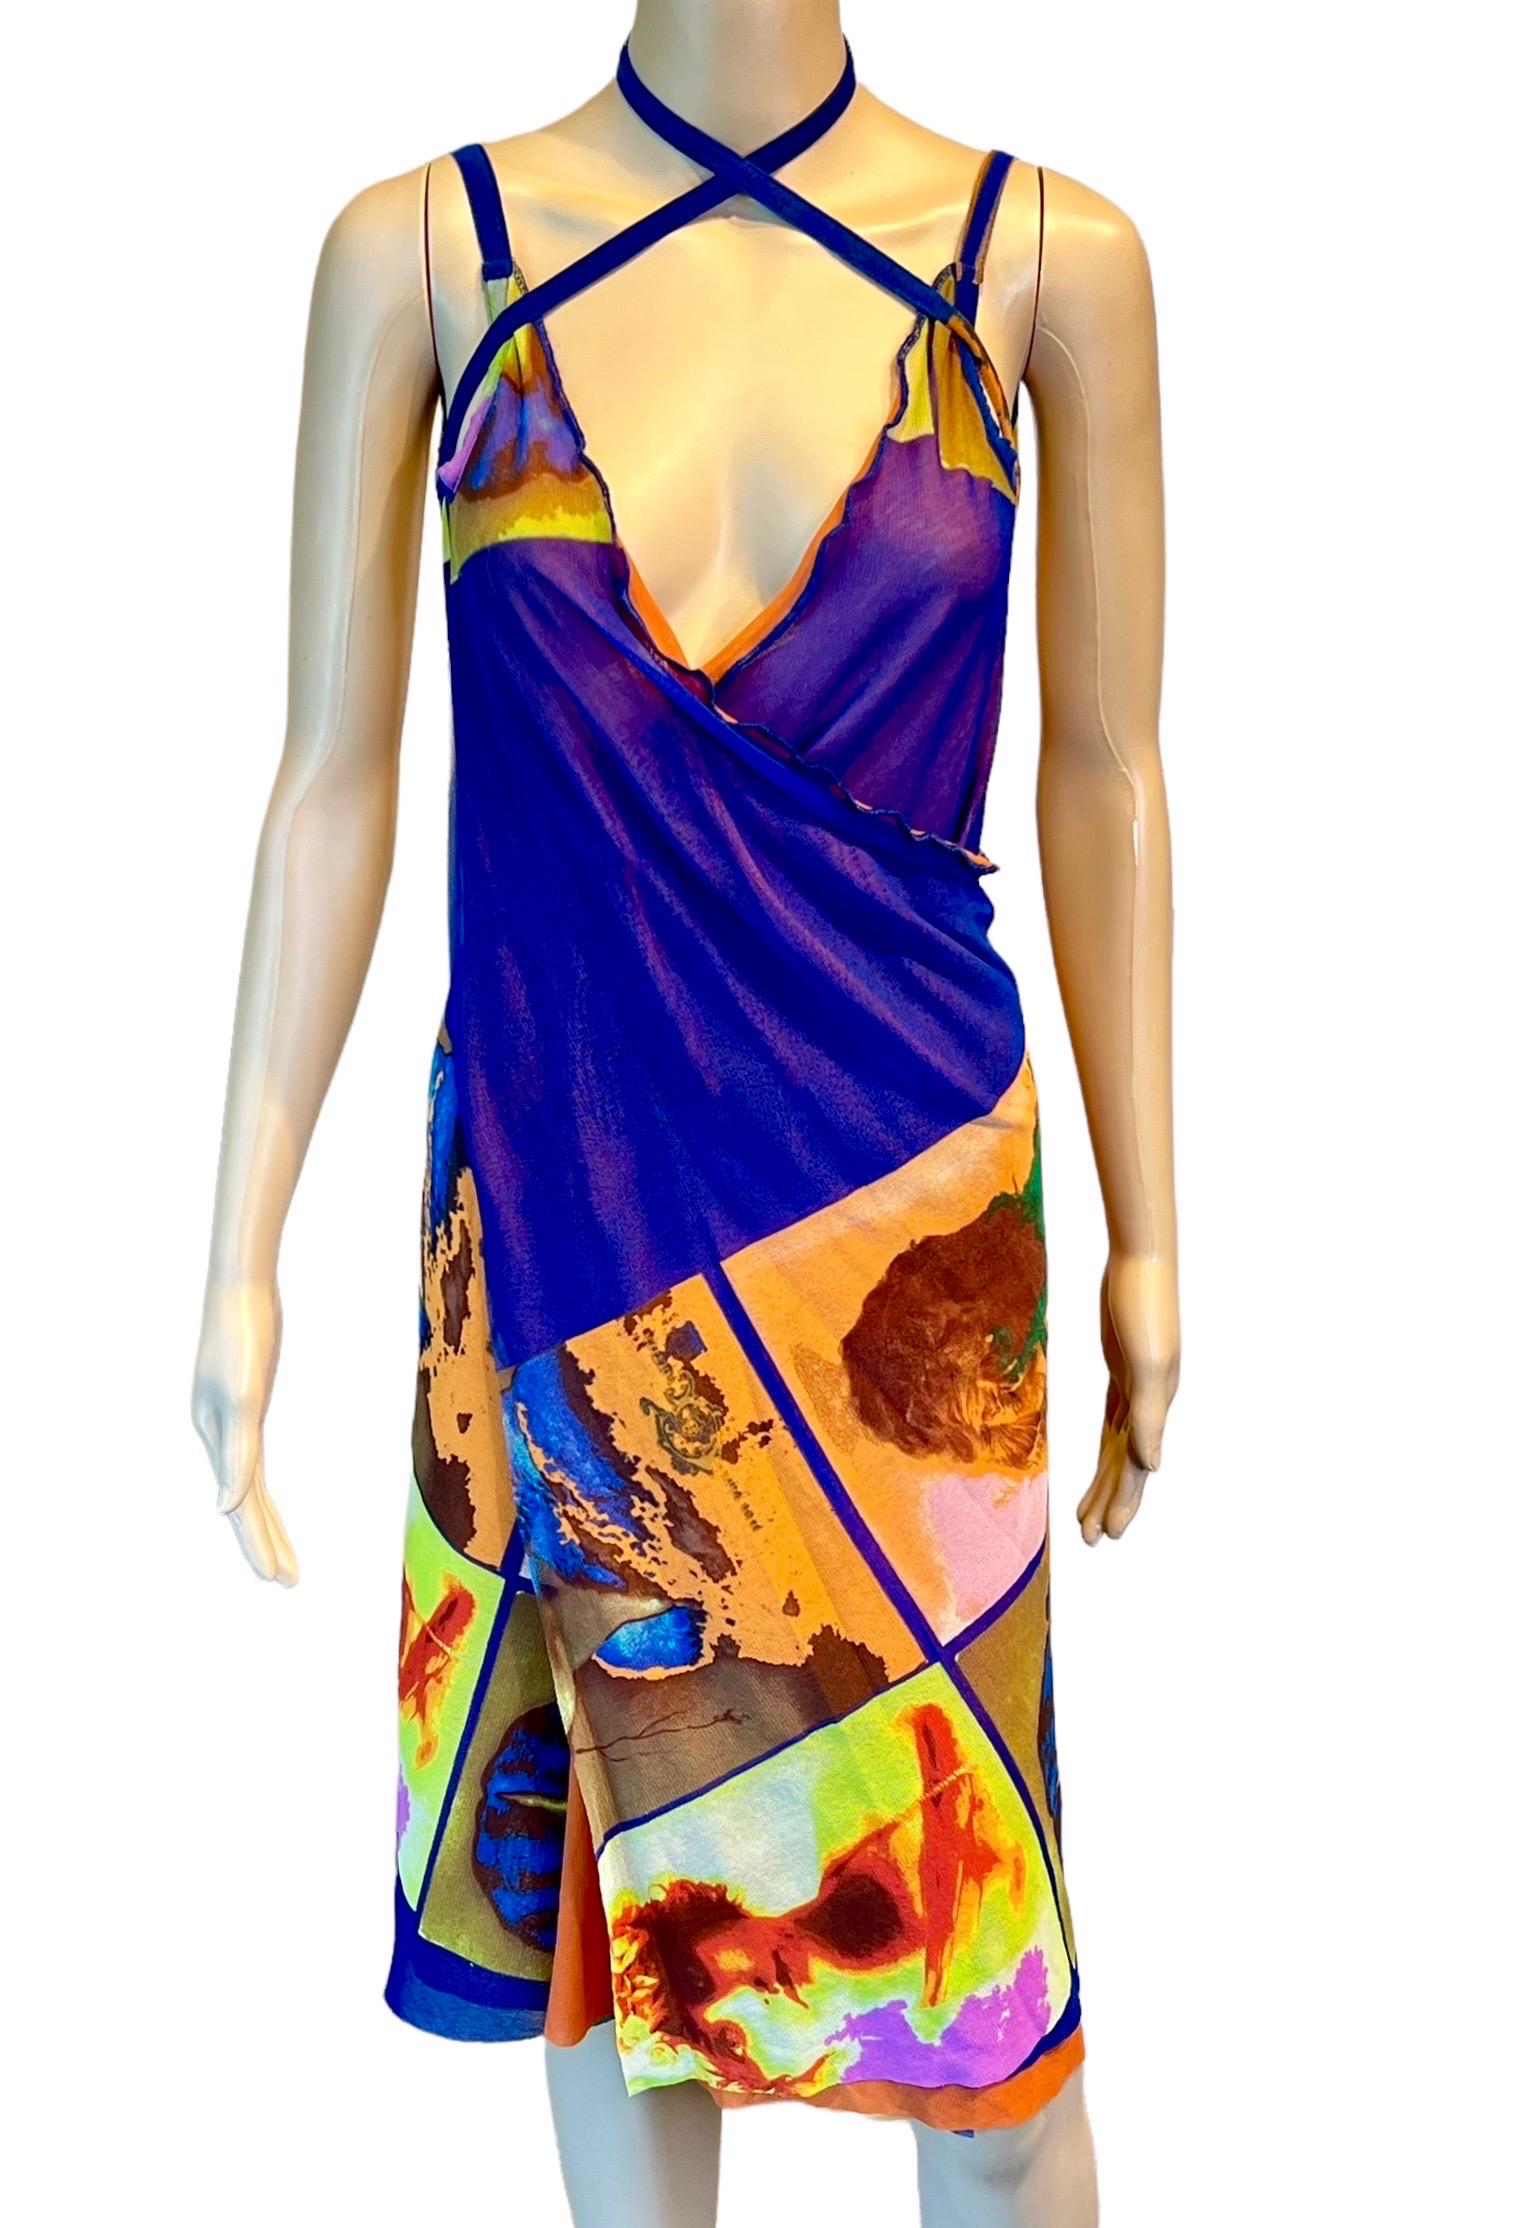 Jean Paul Gaultier Soleil S/S 2002 Vintage “Portraits” Mesh Wrap Dress  In Good Condition For Sale In Naples, FL